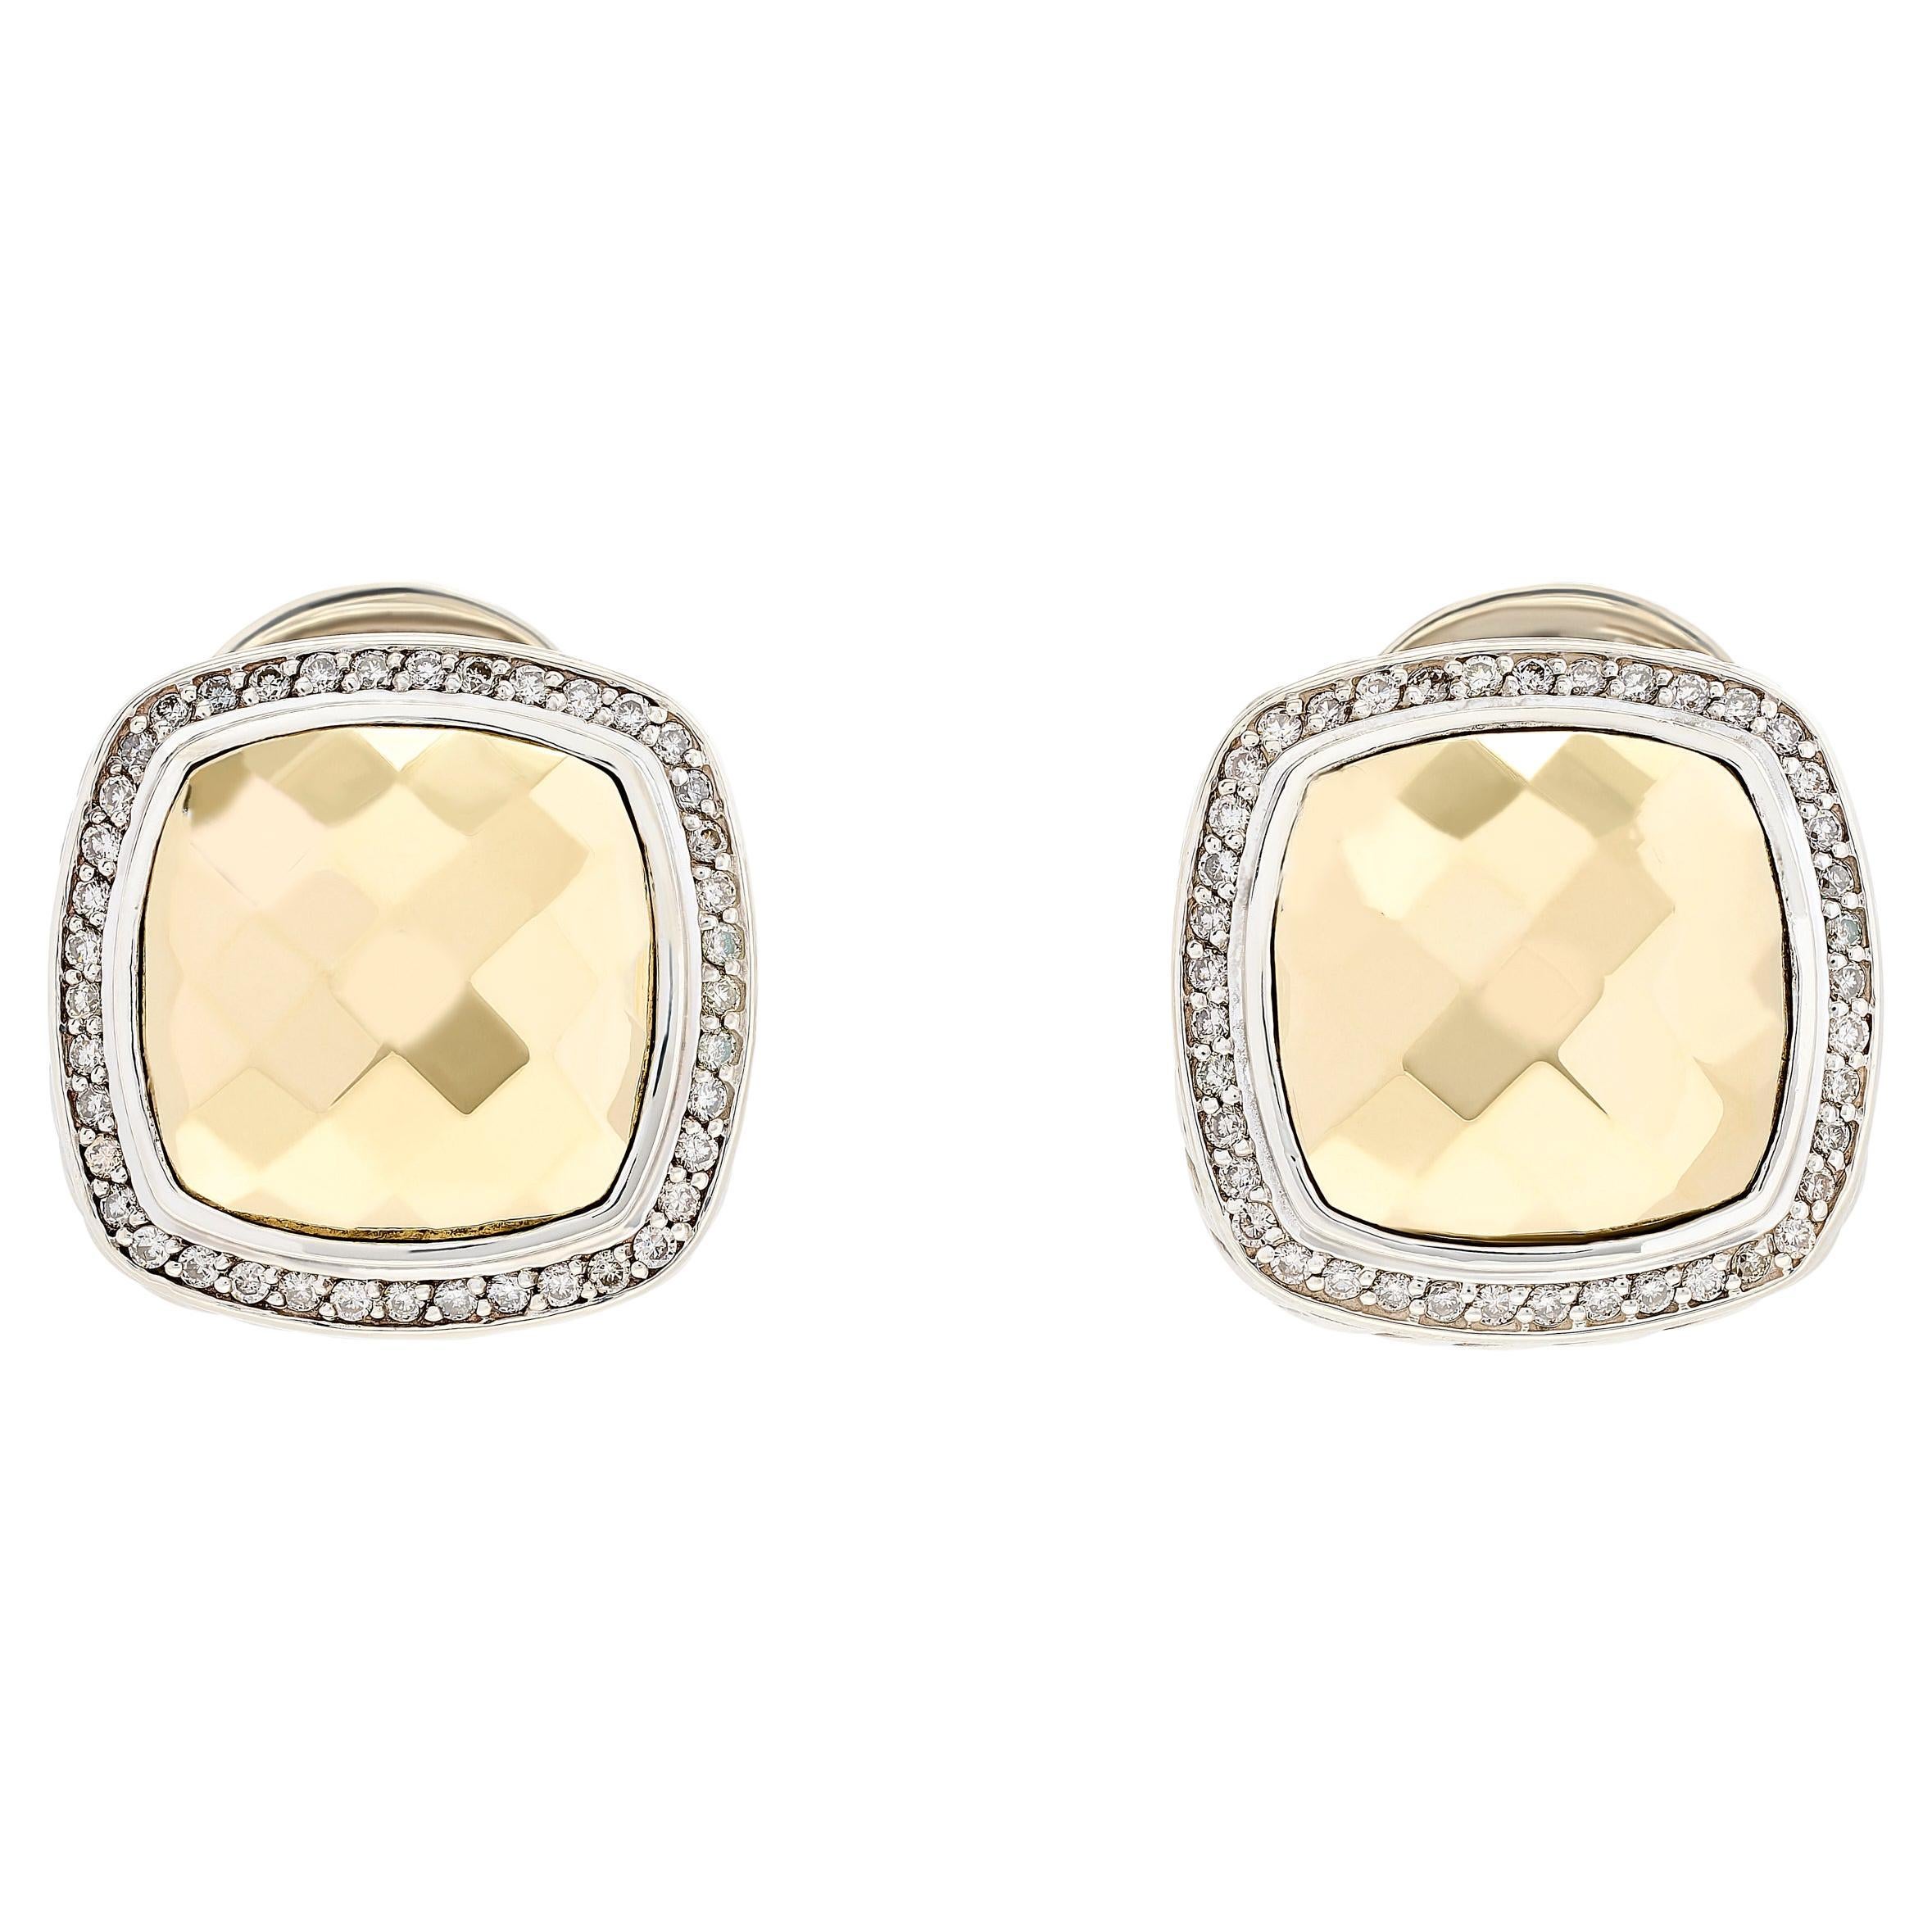 David Yurman Silver and Textured 18 Karat Yellow Gold Diamond Halo Earrings